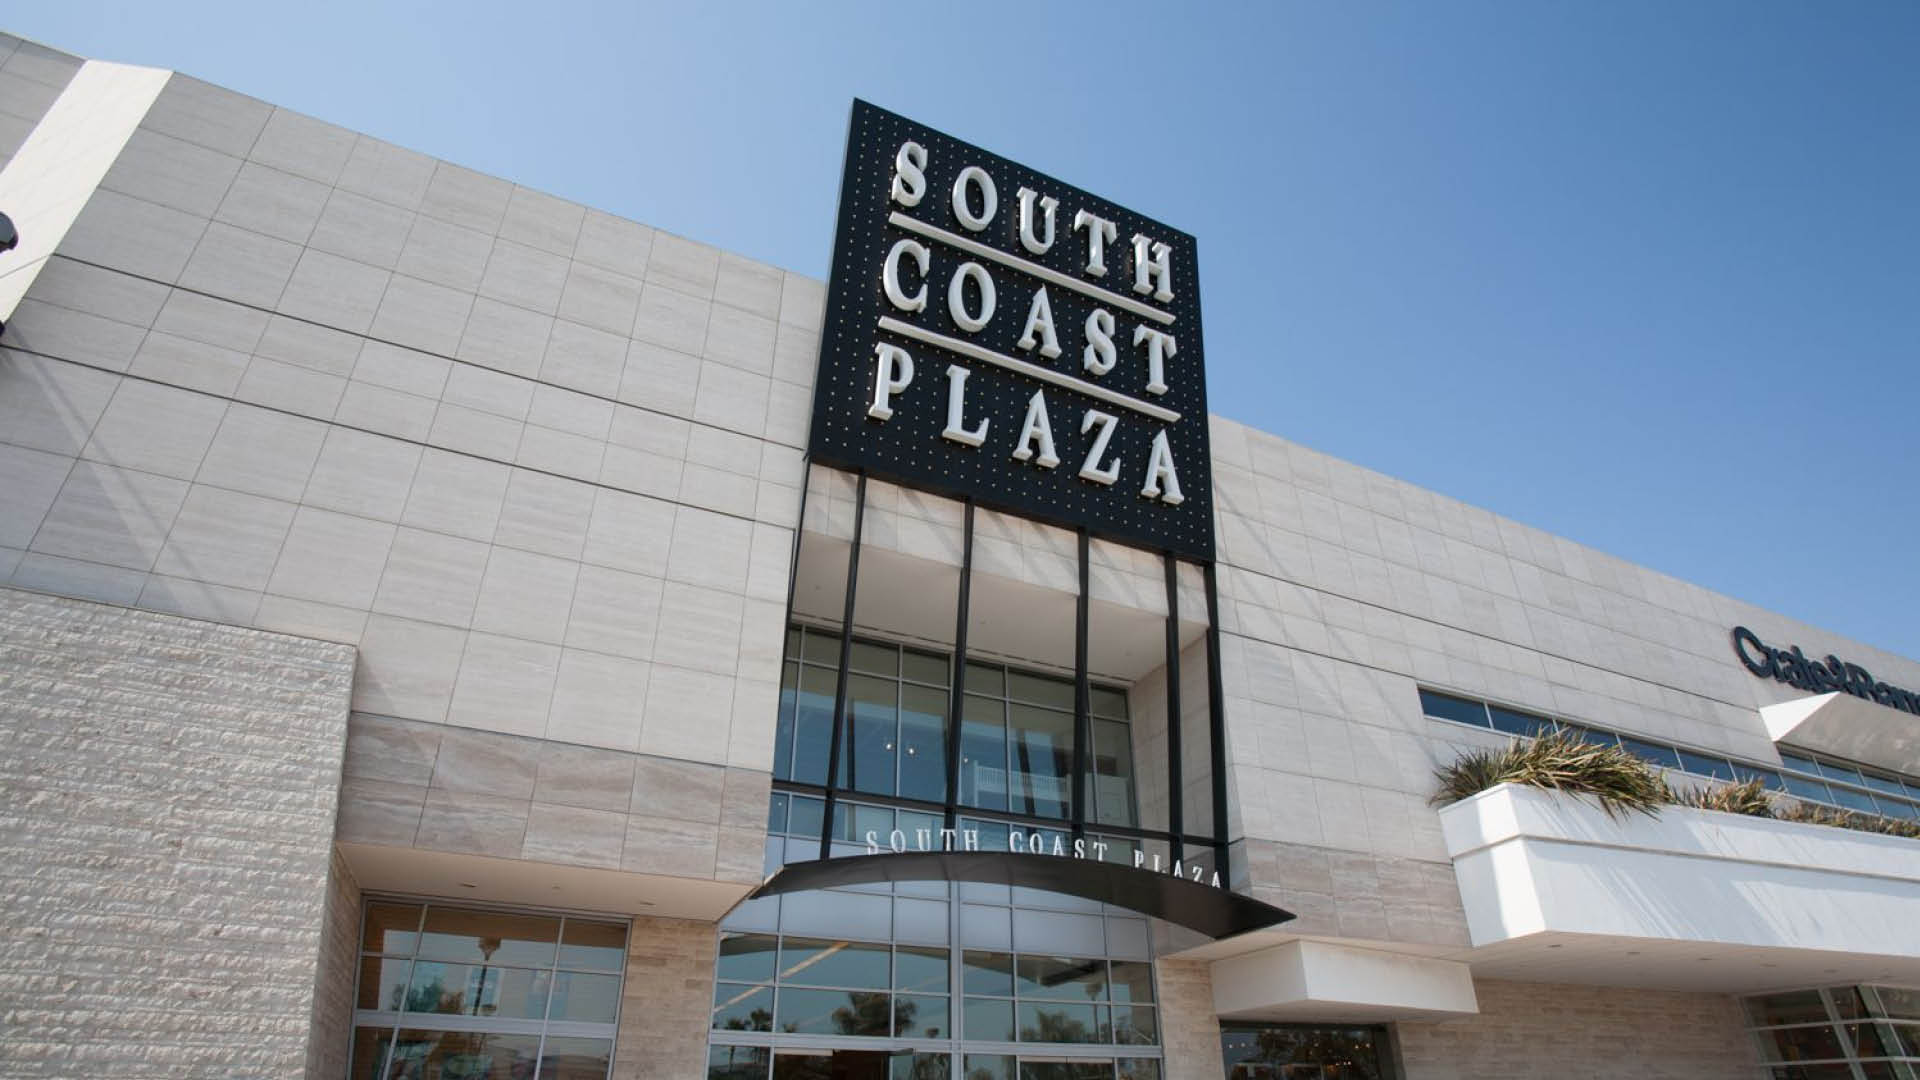 South Coast Plaza Movie Theater